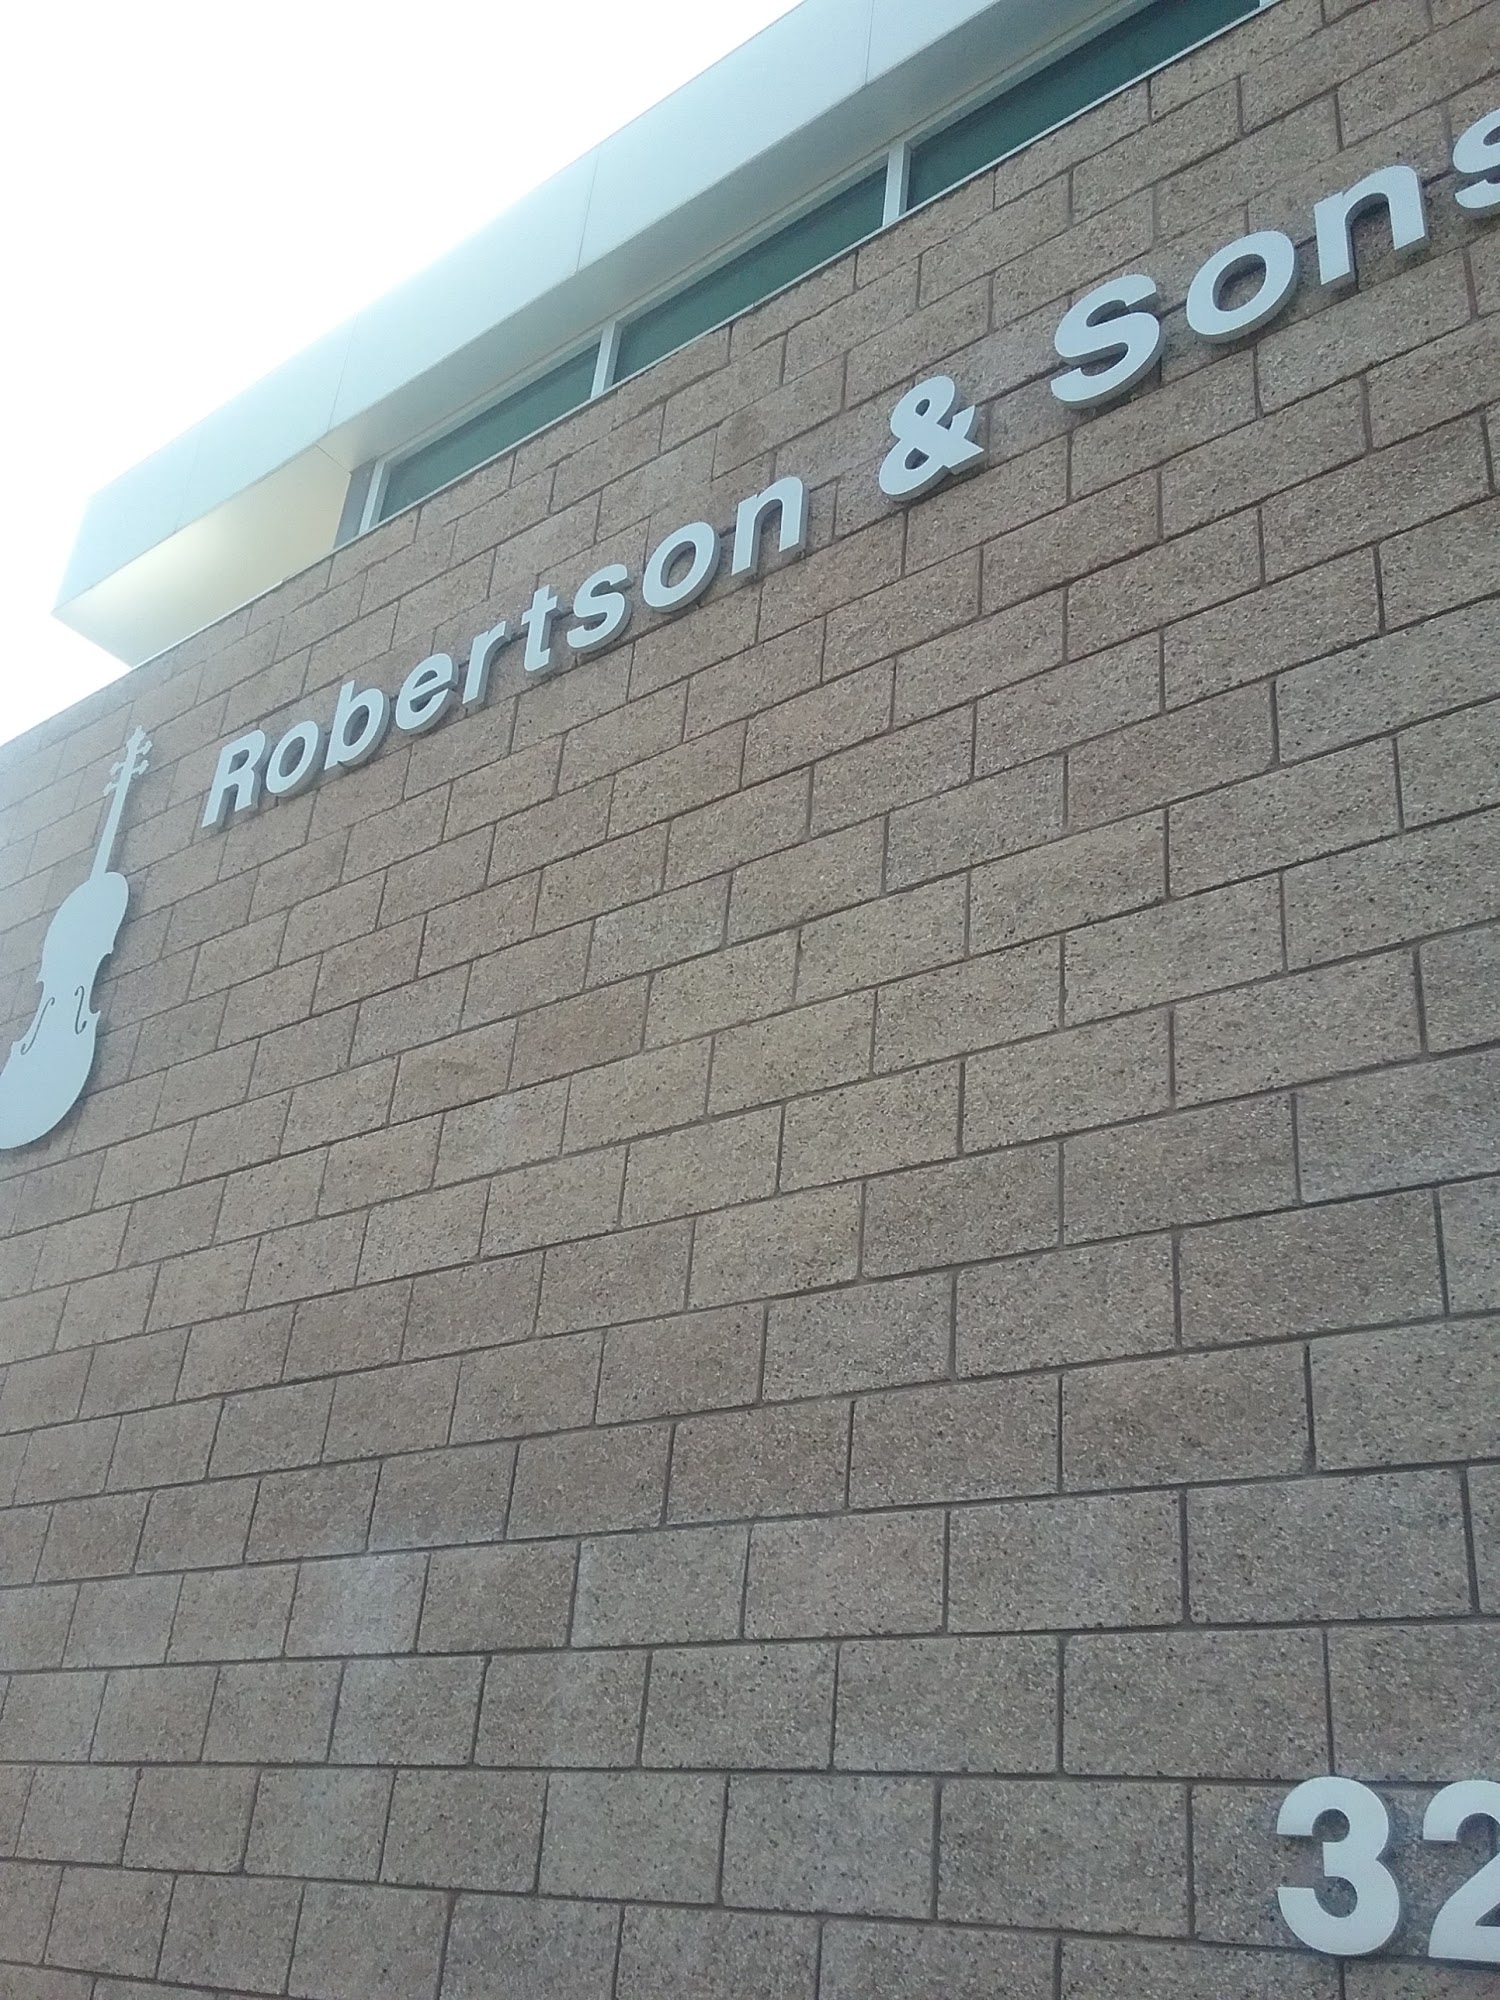 Robertson & Sons Violin Shop